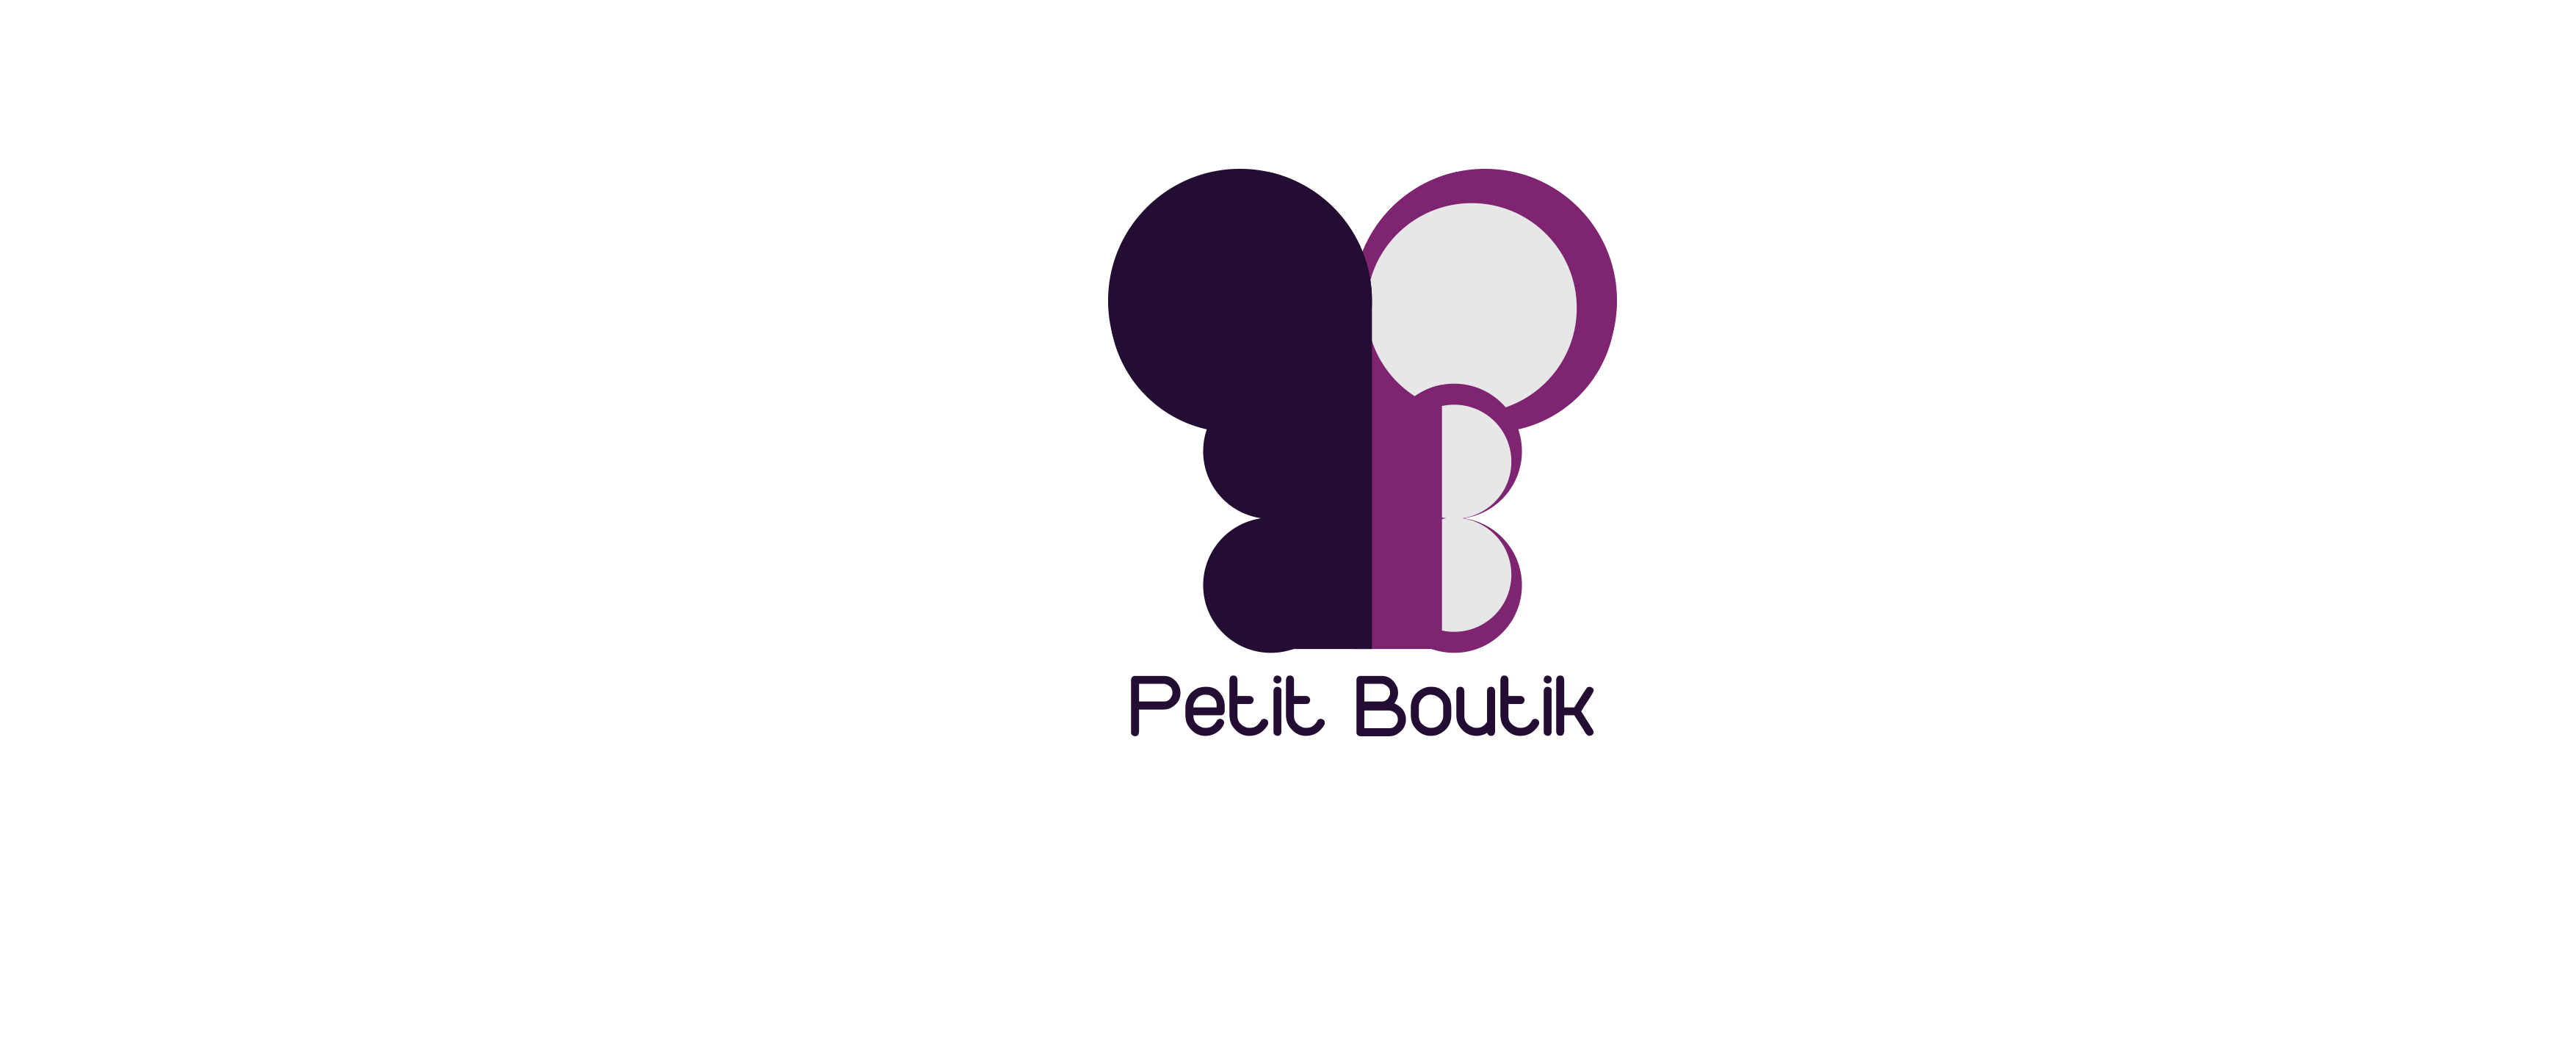 petit boutik logo design v2 by momenarts